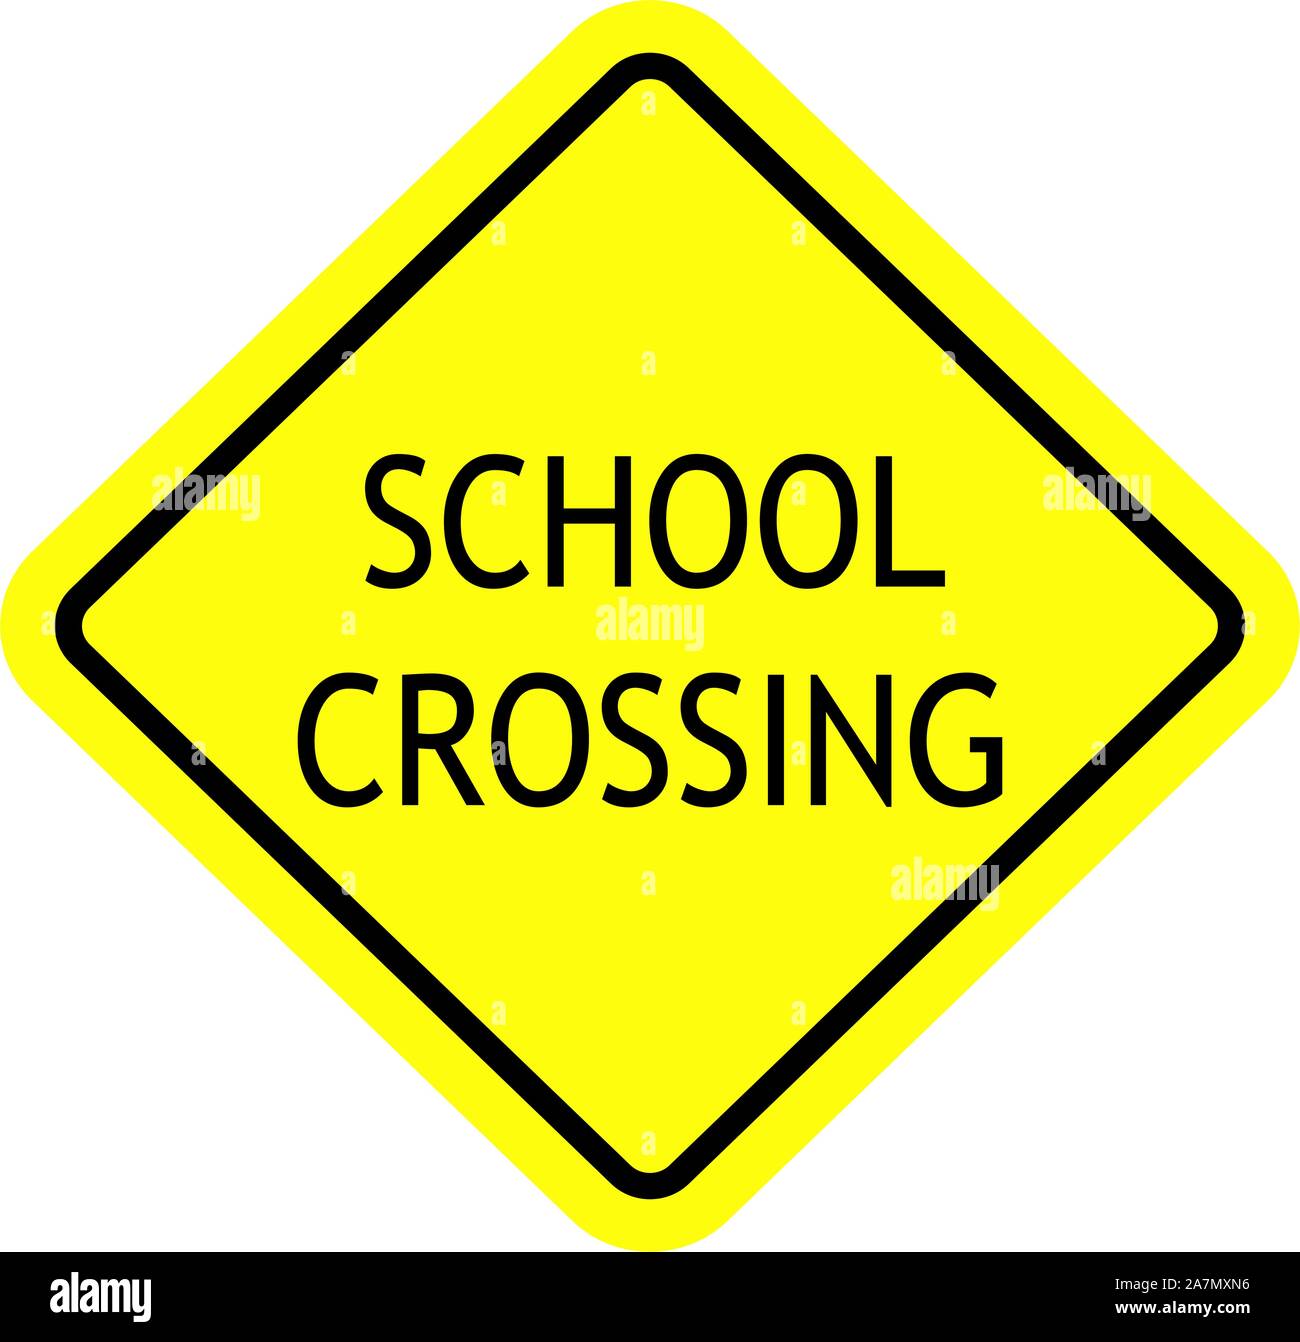 Schule Crossing (Wörter) Warnschild Vector Illustration. Gelb, Schwarz. Stock Vektor